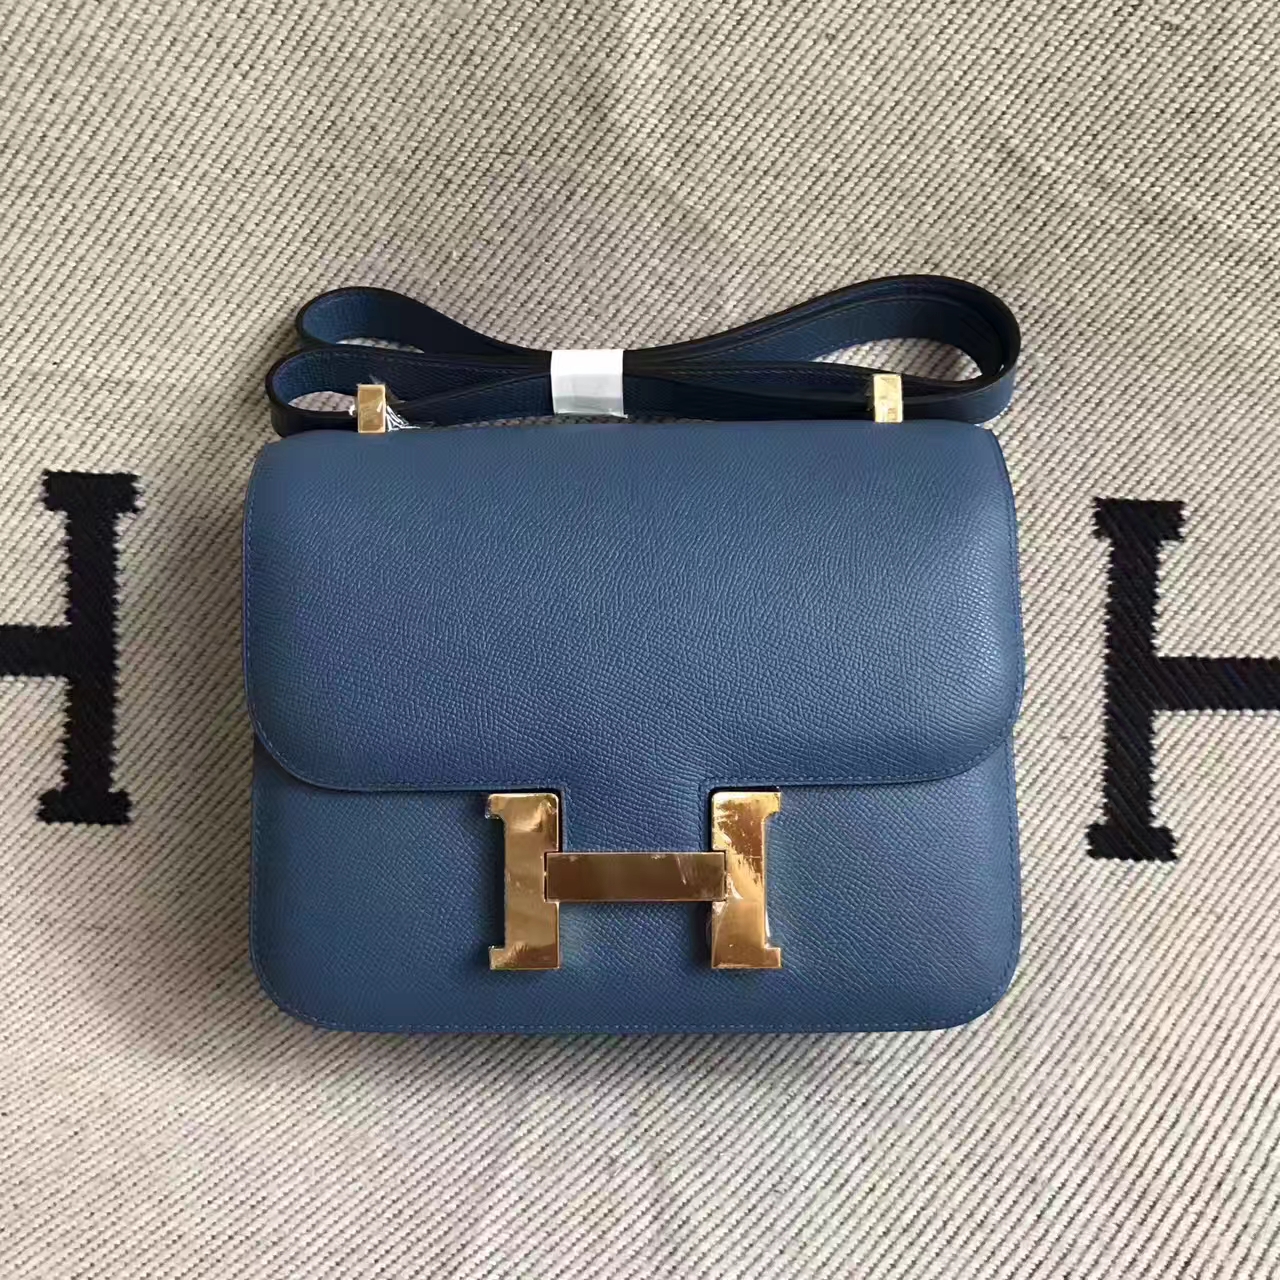 On Sale Hermes R2 Agate Blue Epsom Leather Constance Bag 23cm